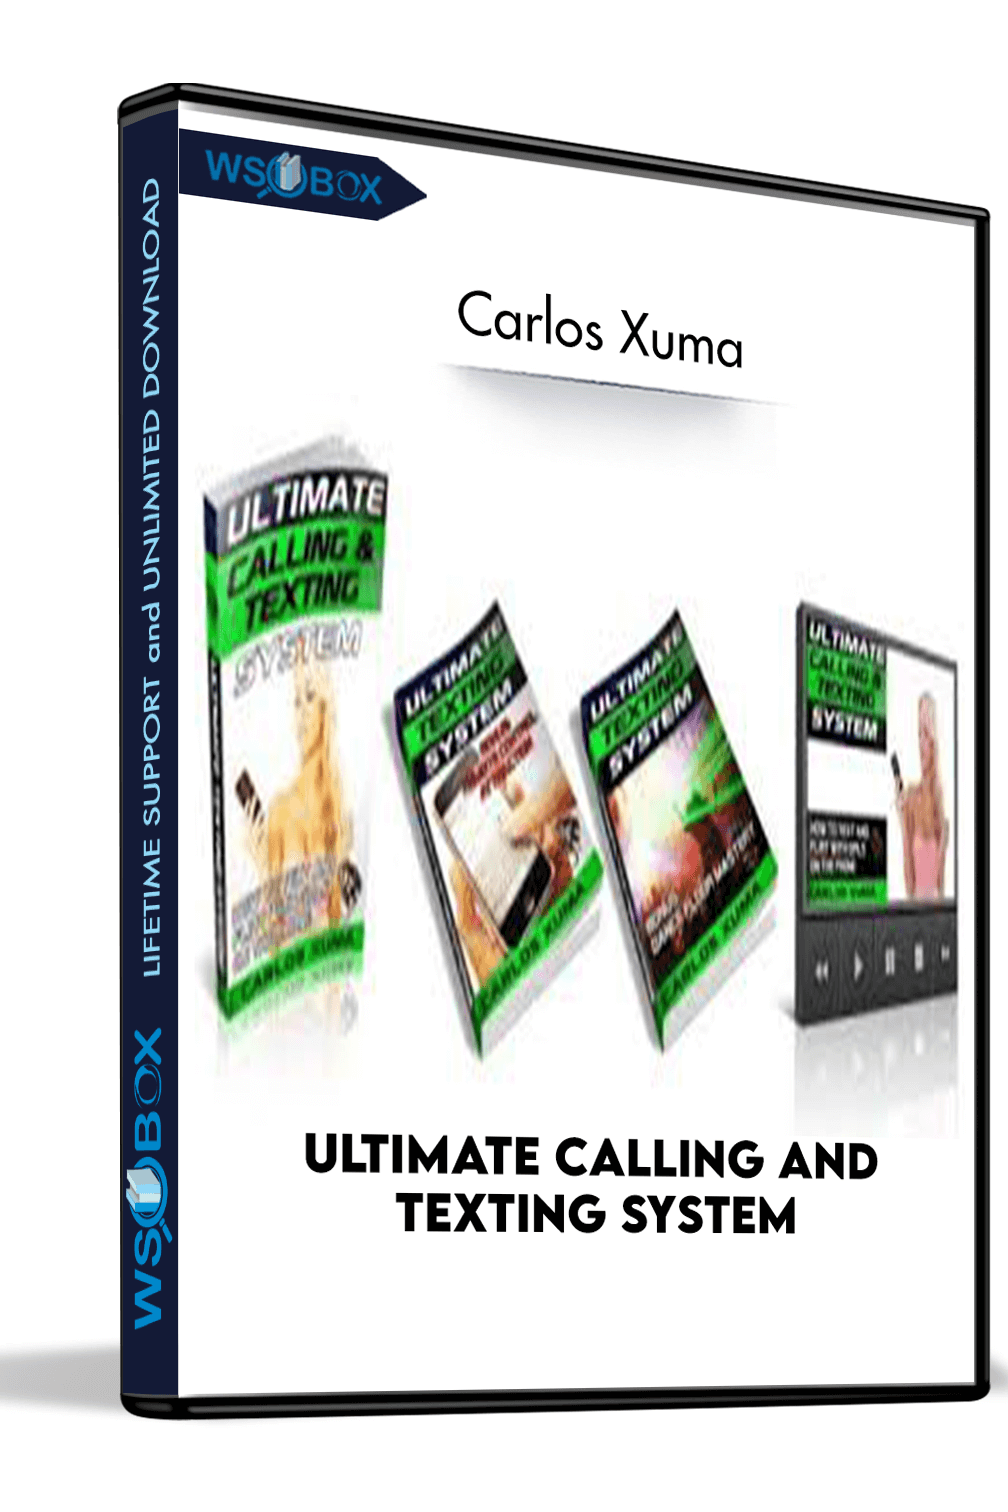 ultimate-calling-and-texting-system-carlos-xuma